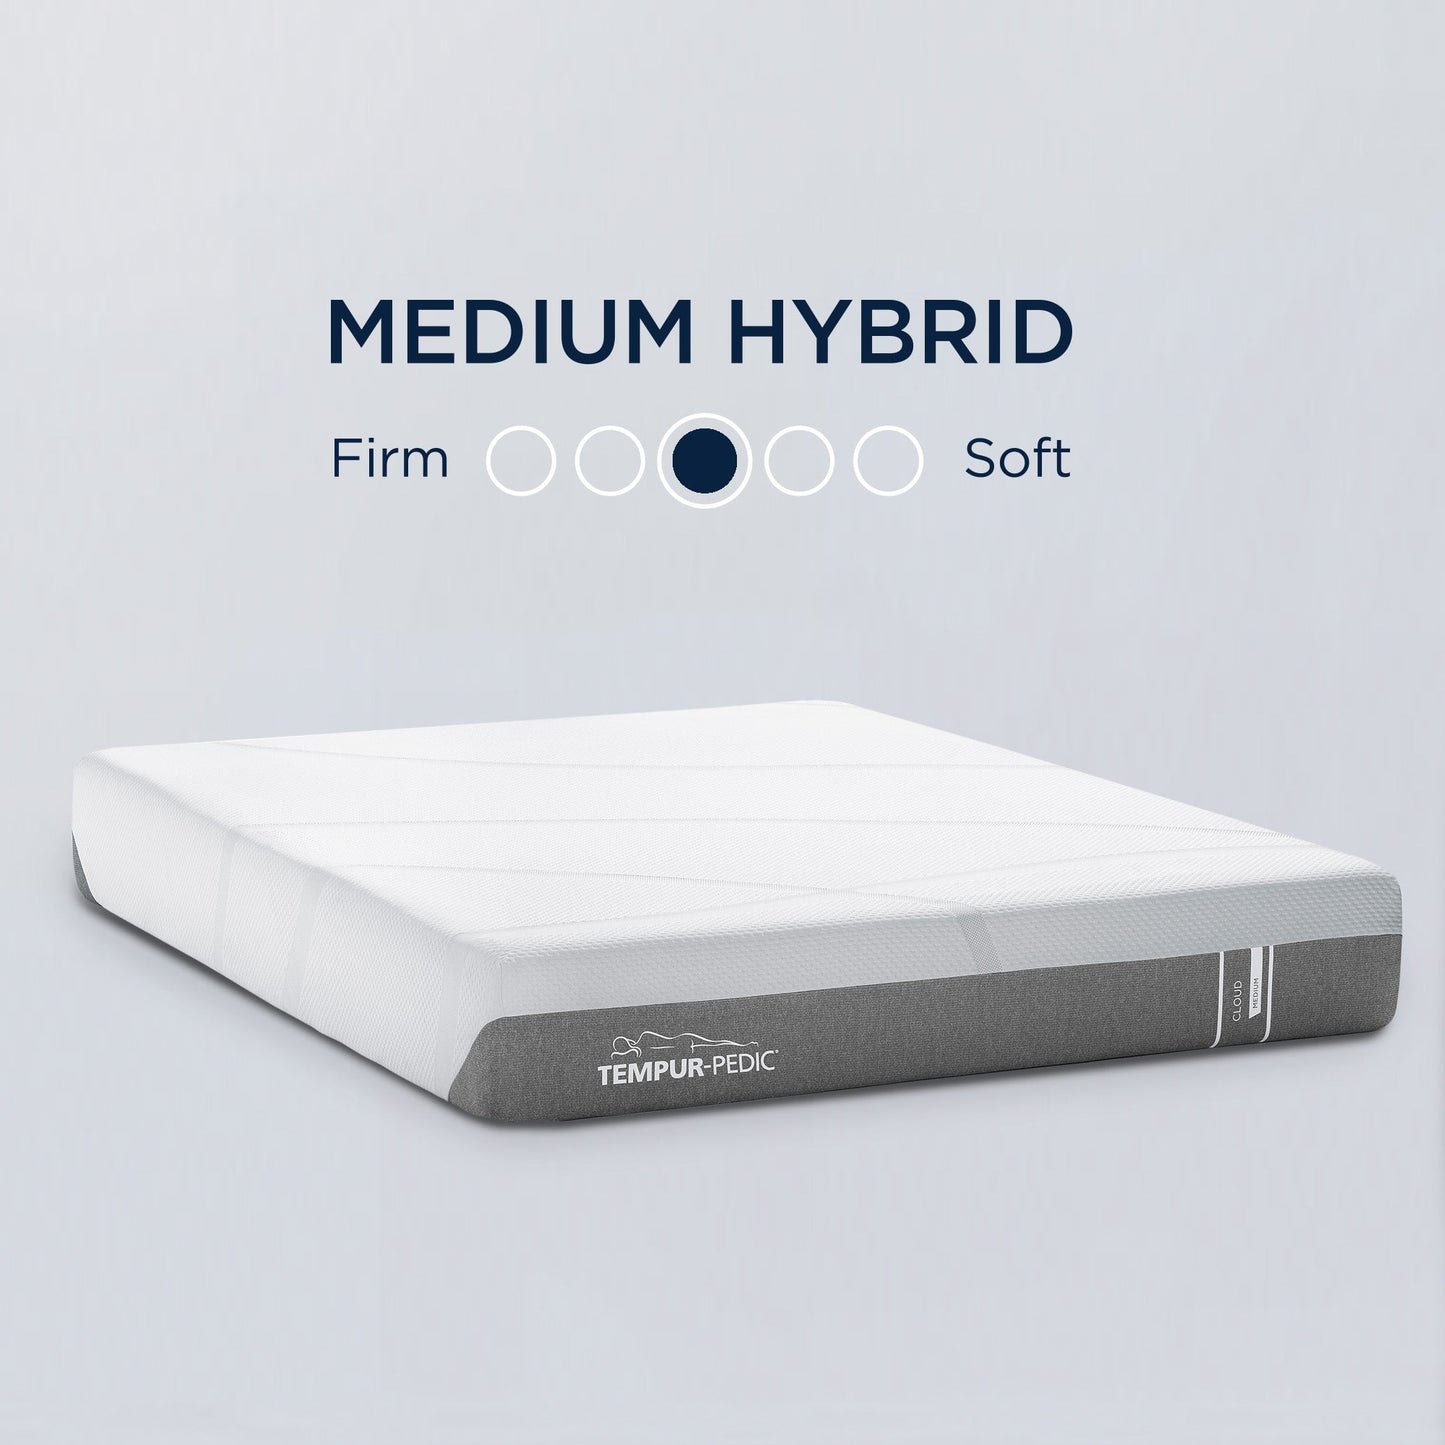 Tempur-Cloud Medium Hybrid Mattress Comfort Level Medium